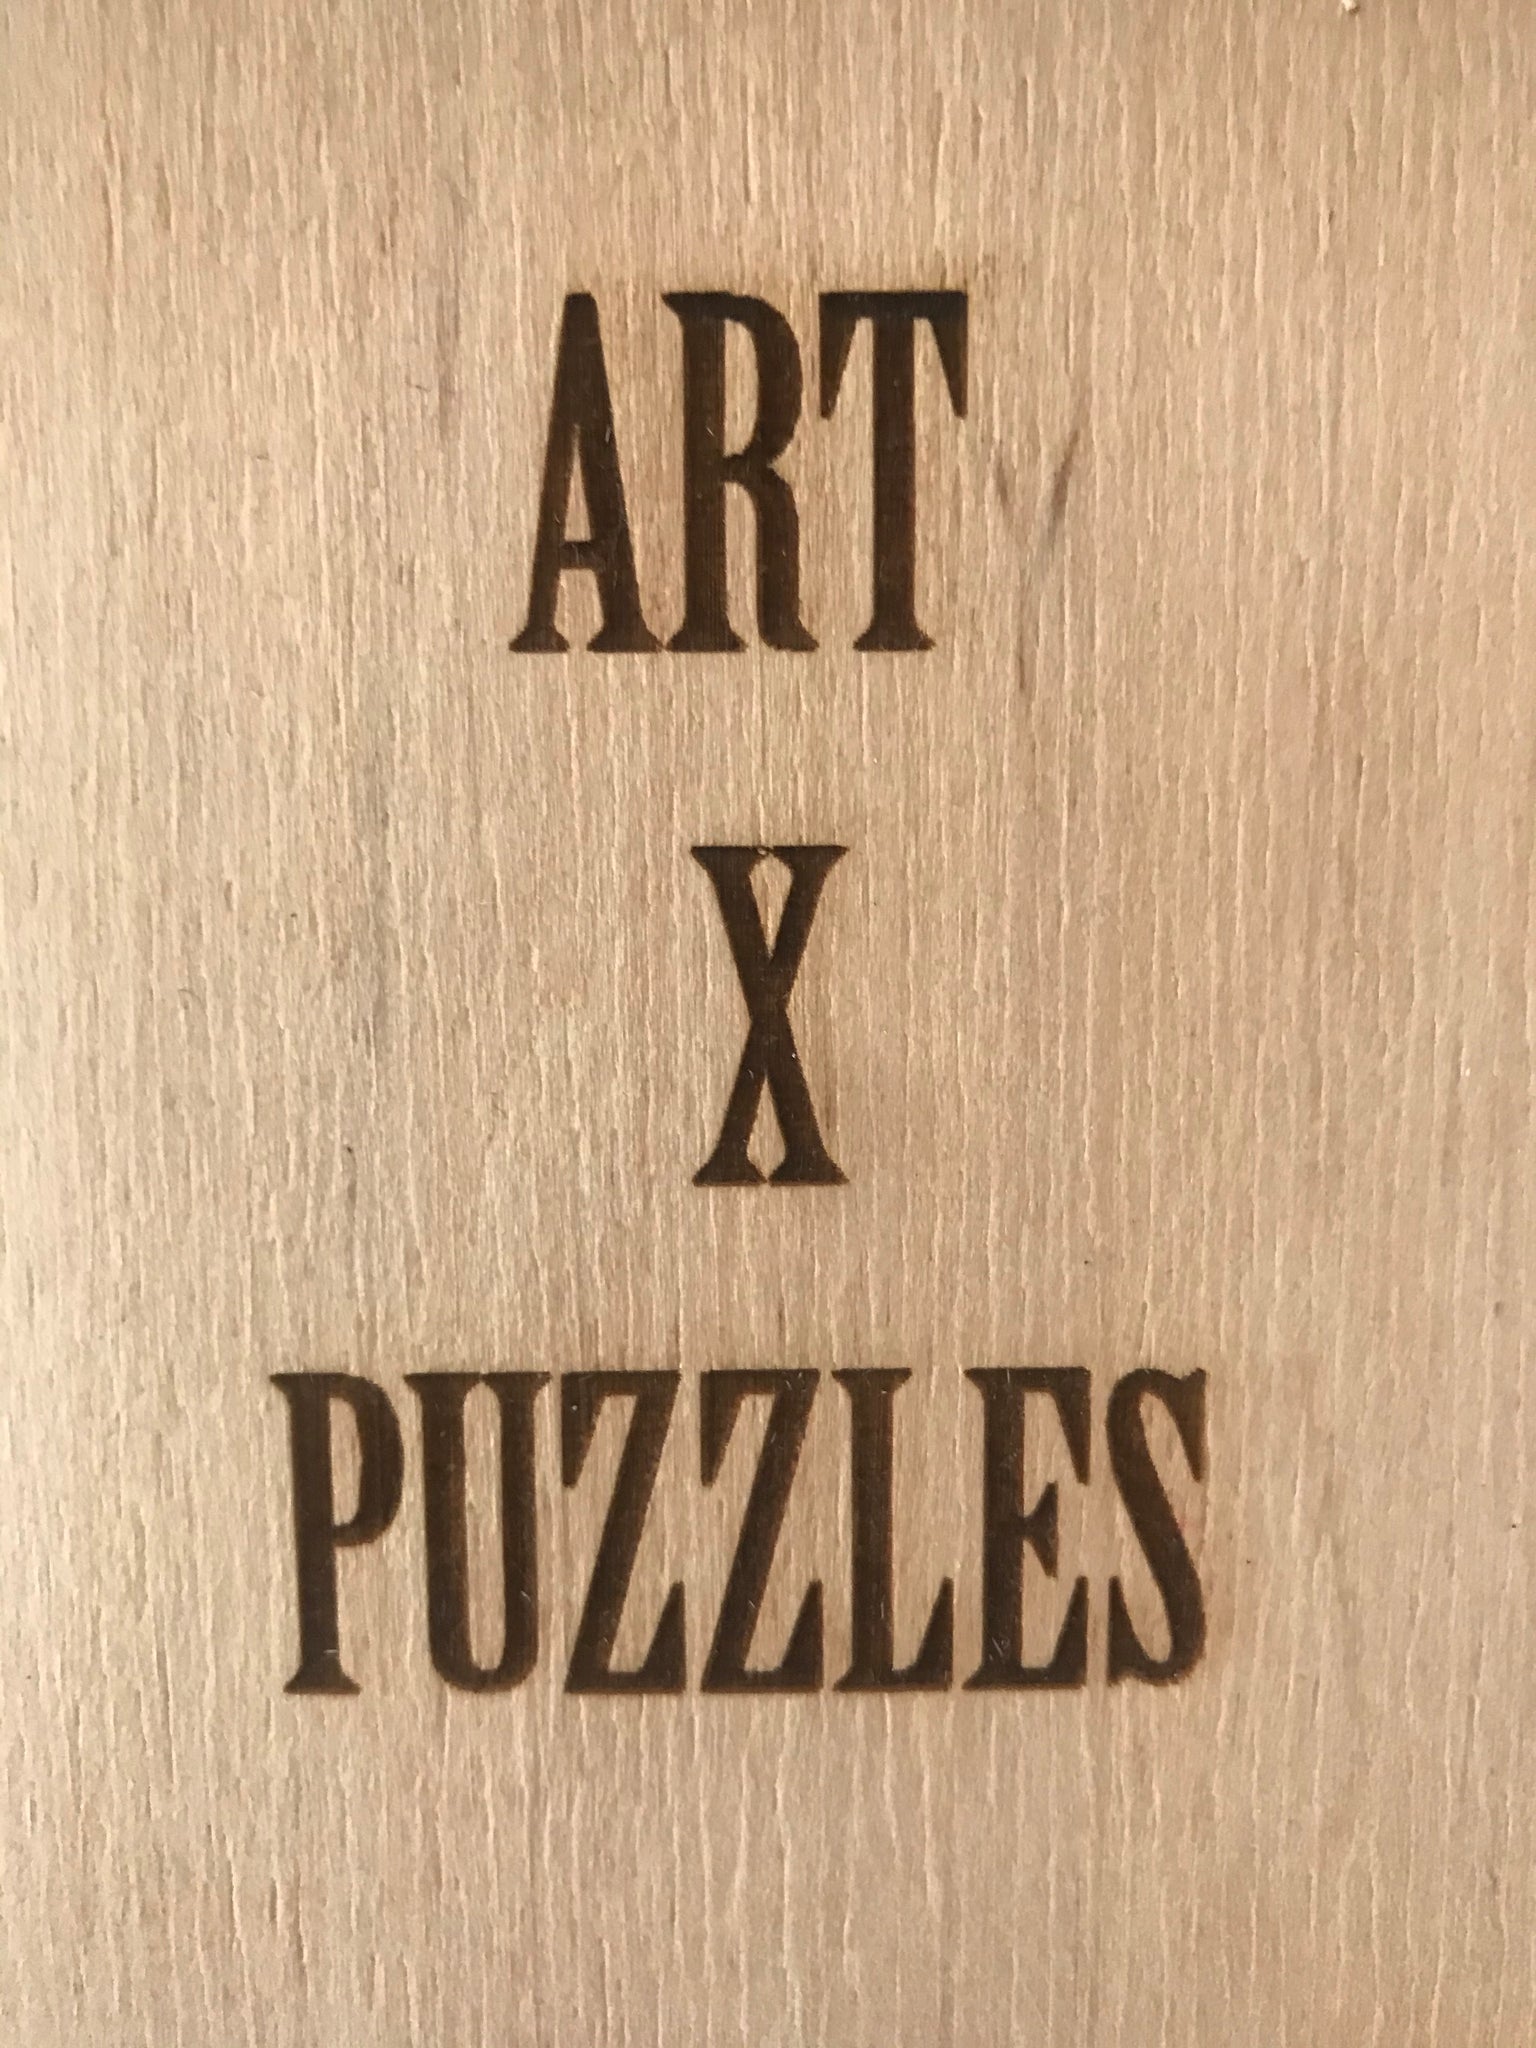 Artist Arturo Casanova Collector Edition Jigsaw Puzzle